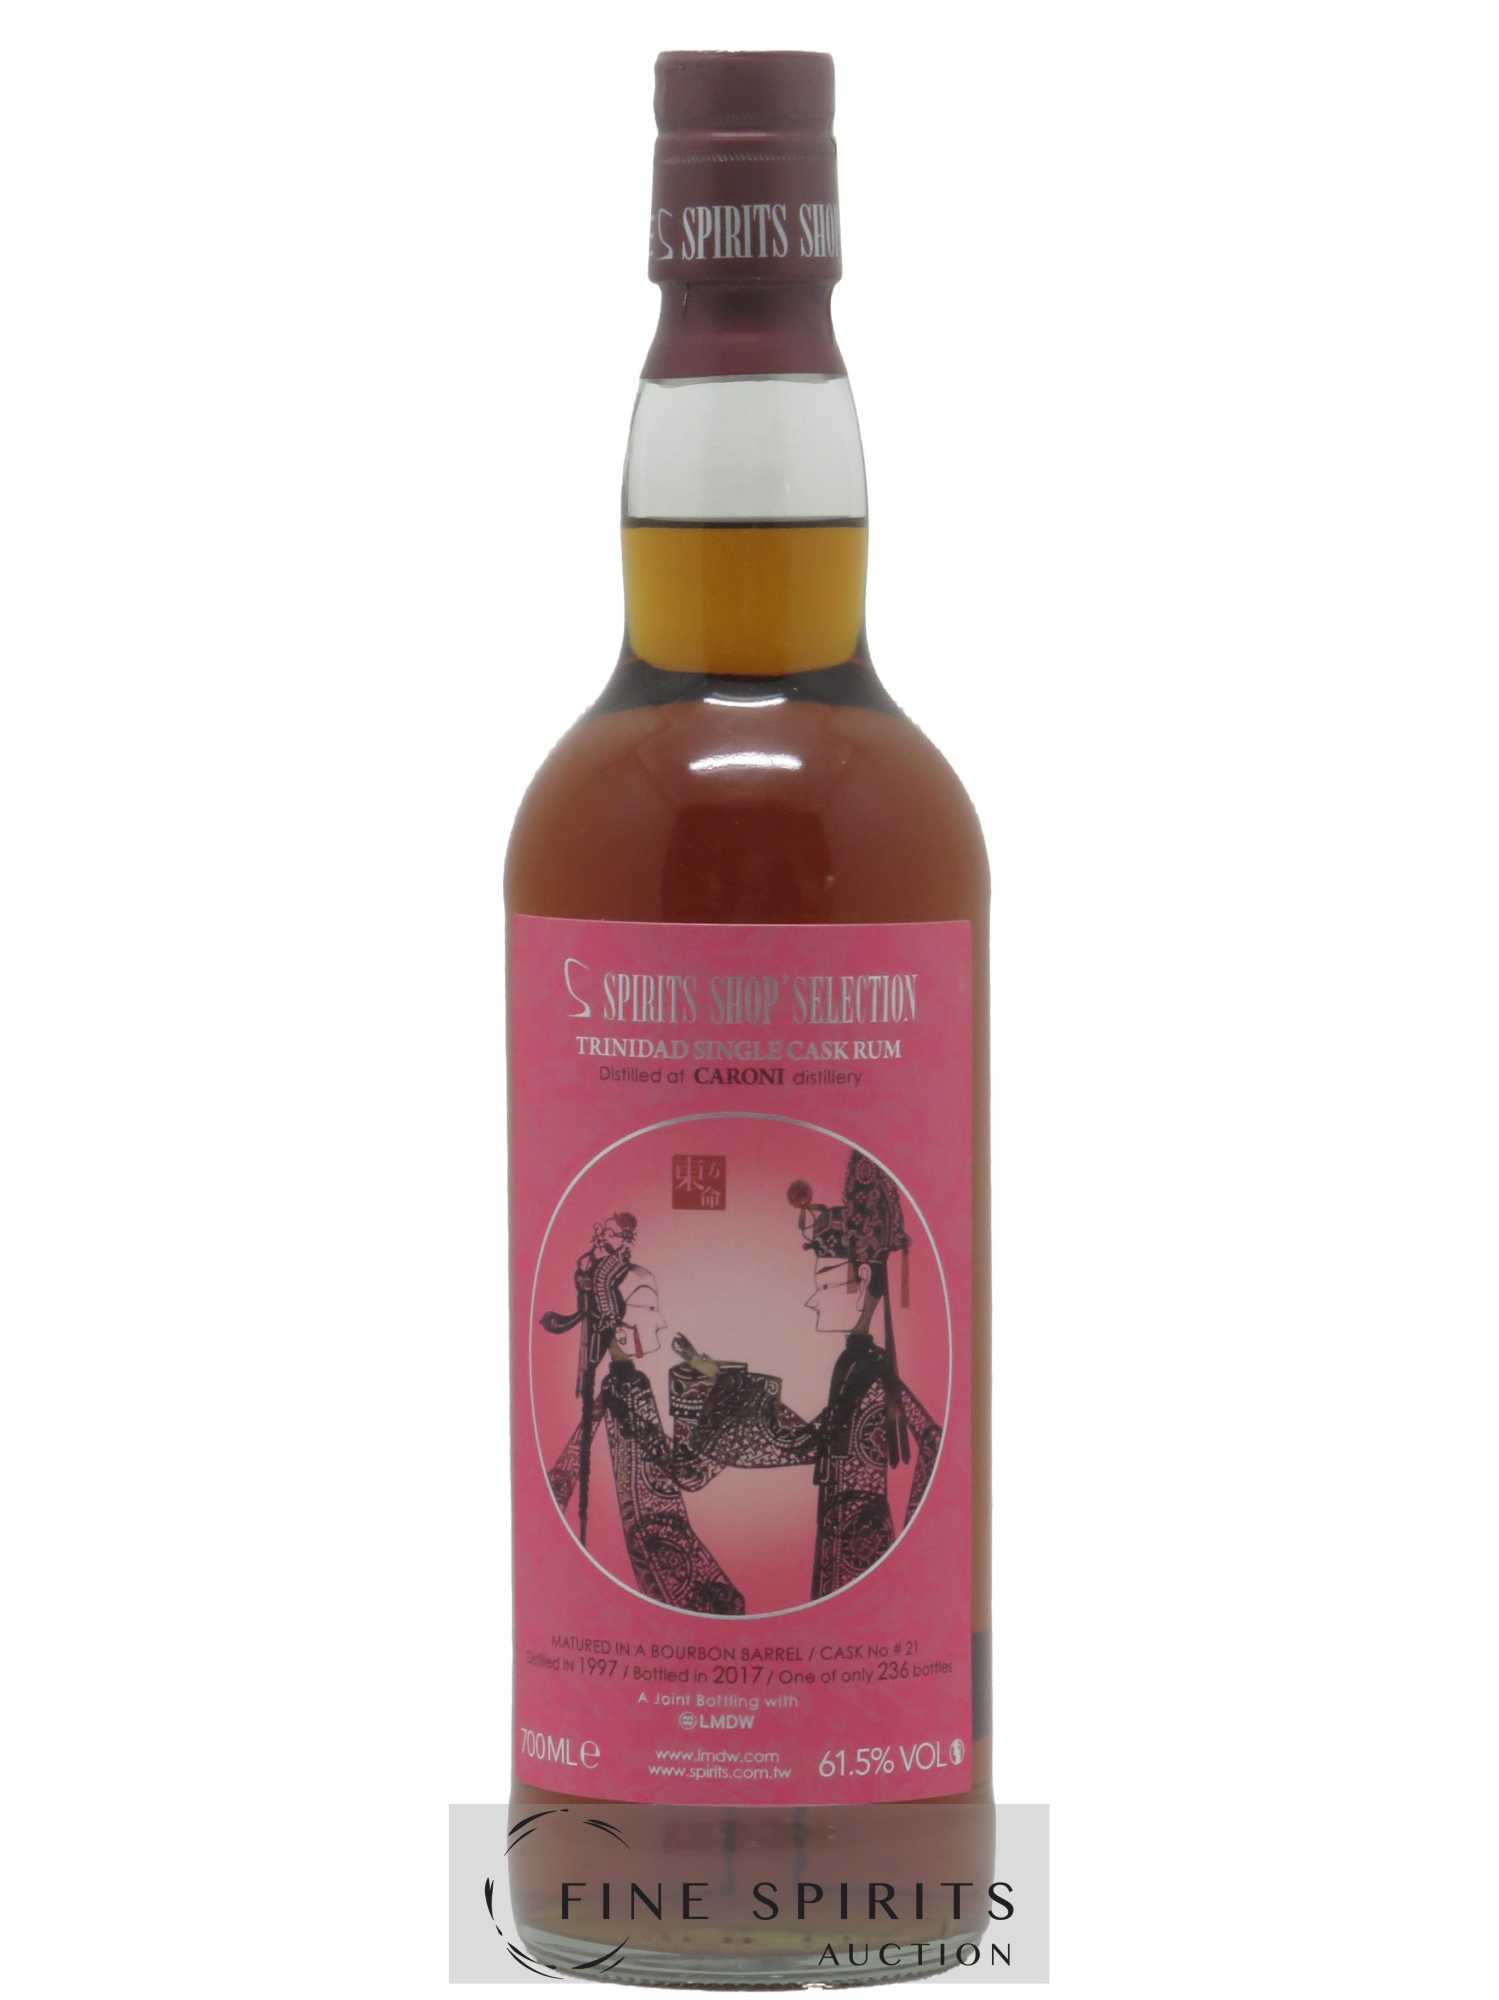 Caroni 1997 Of. Spirits Shop' Selection Bourbon Barrel Cask n°21 - One of 236 - bottled 2017 Joint bottling with LMDW